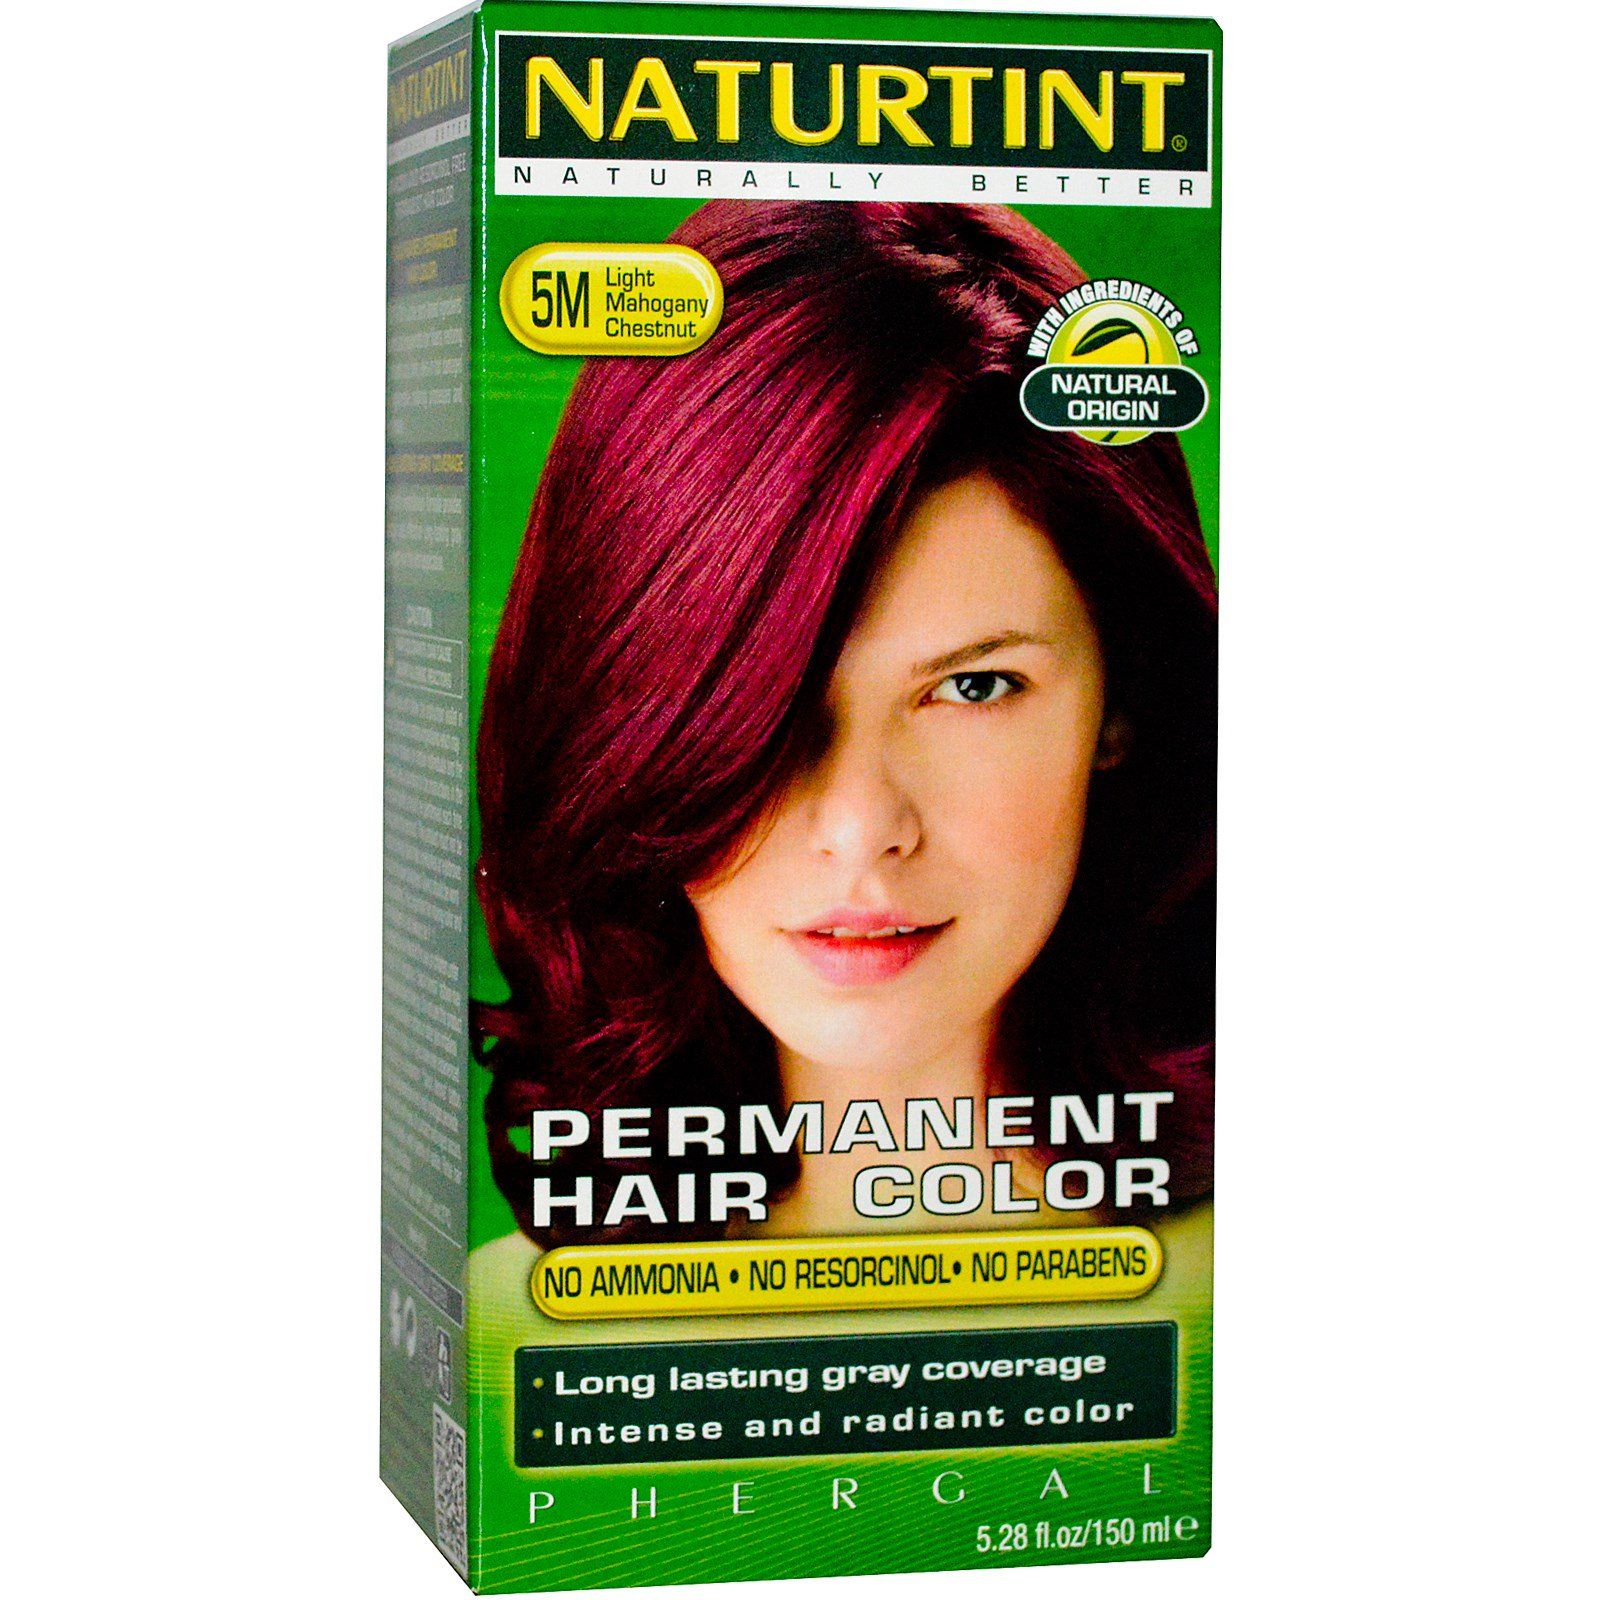 Naturtint Стойкая краска для волос 5M светлый махагони-каштан 5,28 жидких унций (150 мл) стойкая краска для волос 4м красный каштан naturtint